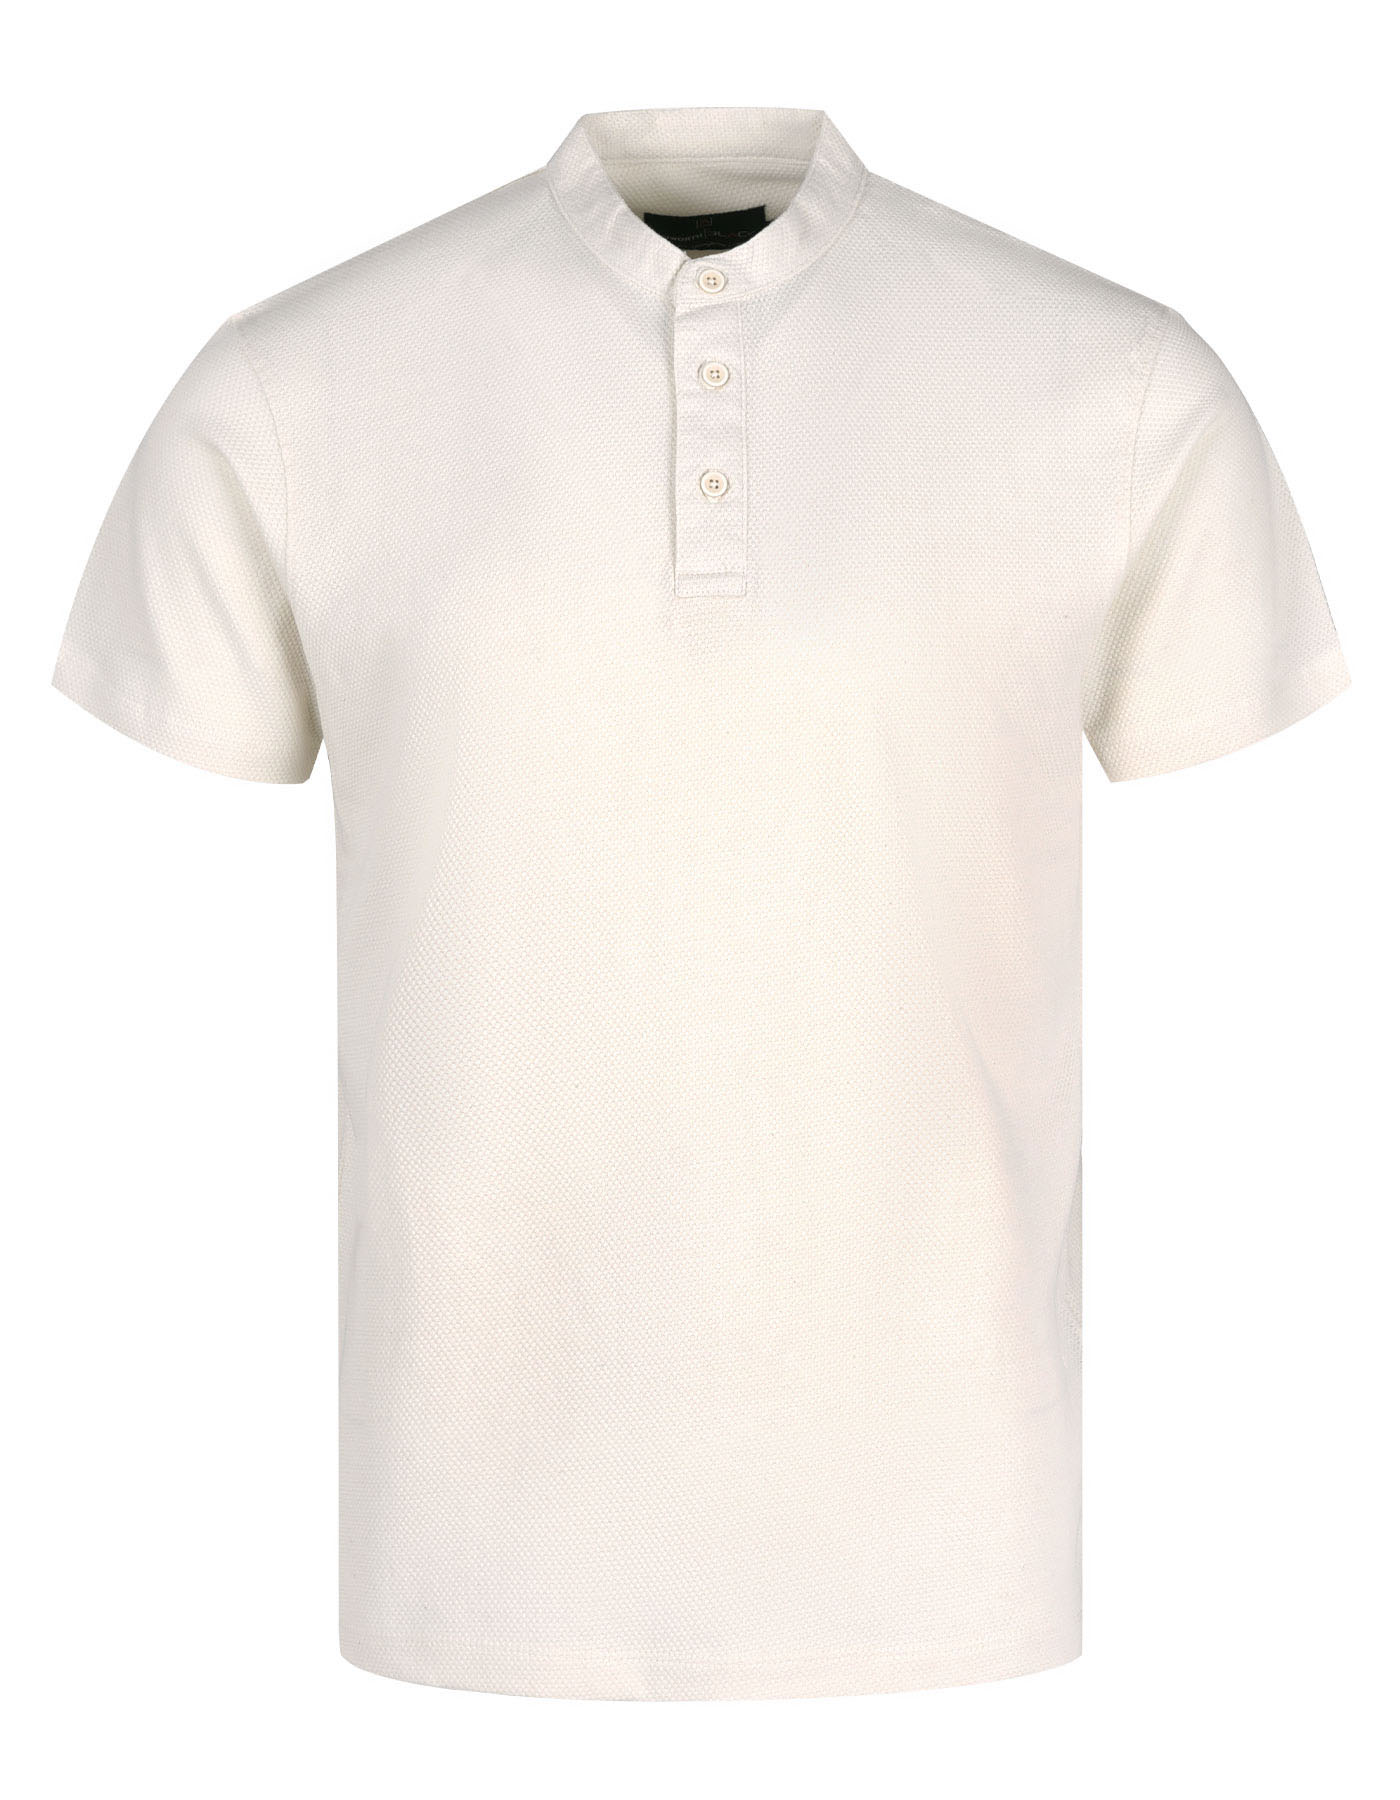 Off White Polo shirt for men